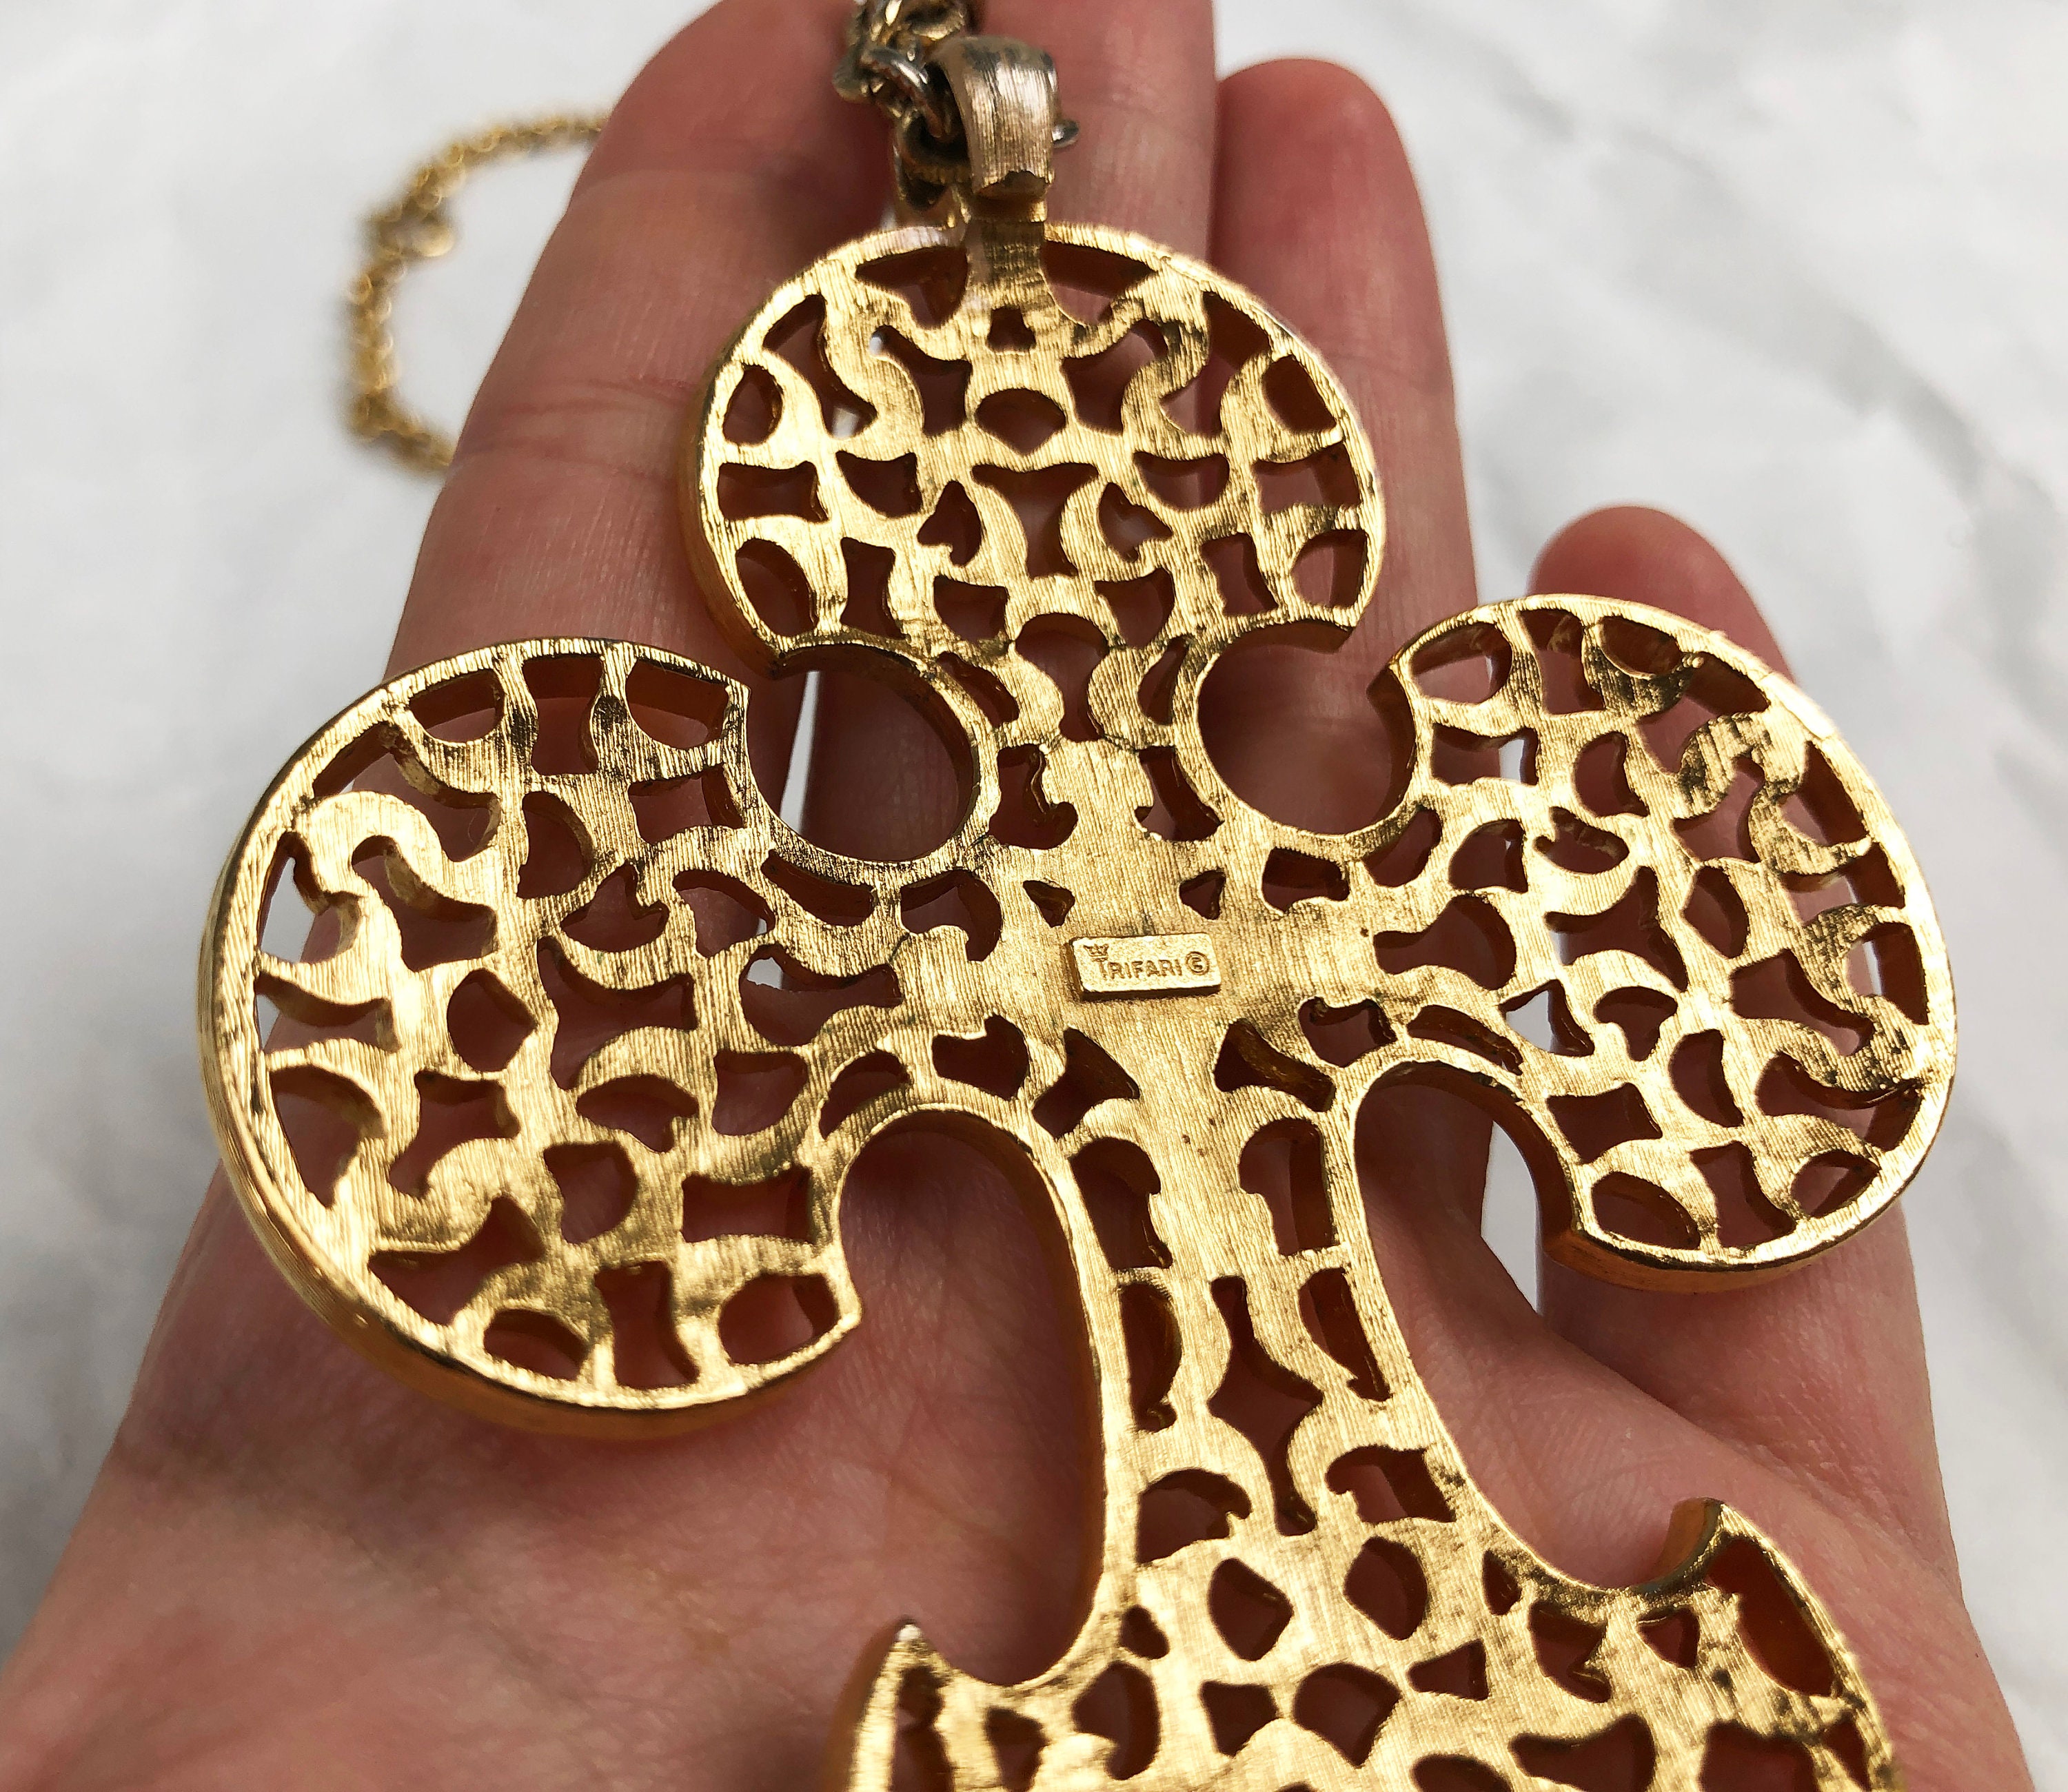 Large gold cross pendant necklace huge bold accent pendant | Etsy